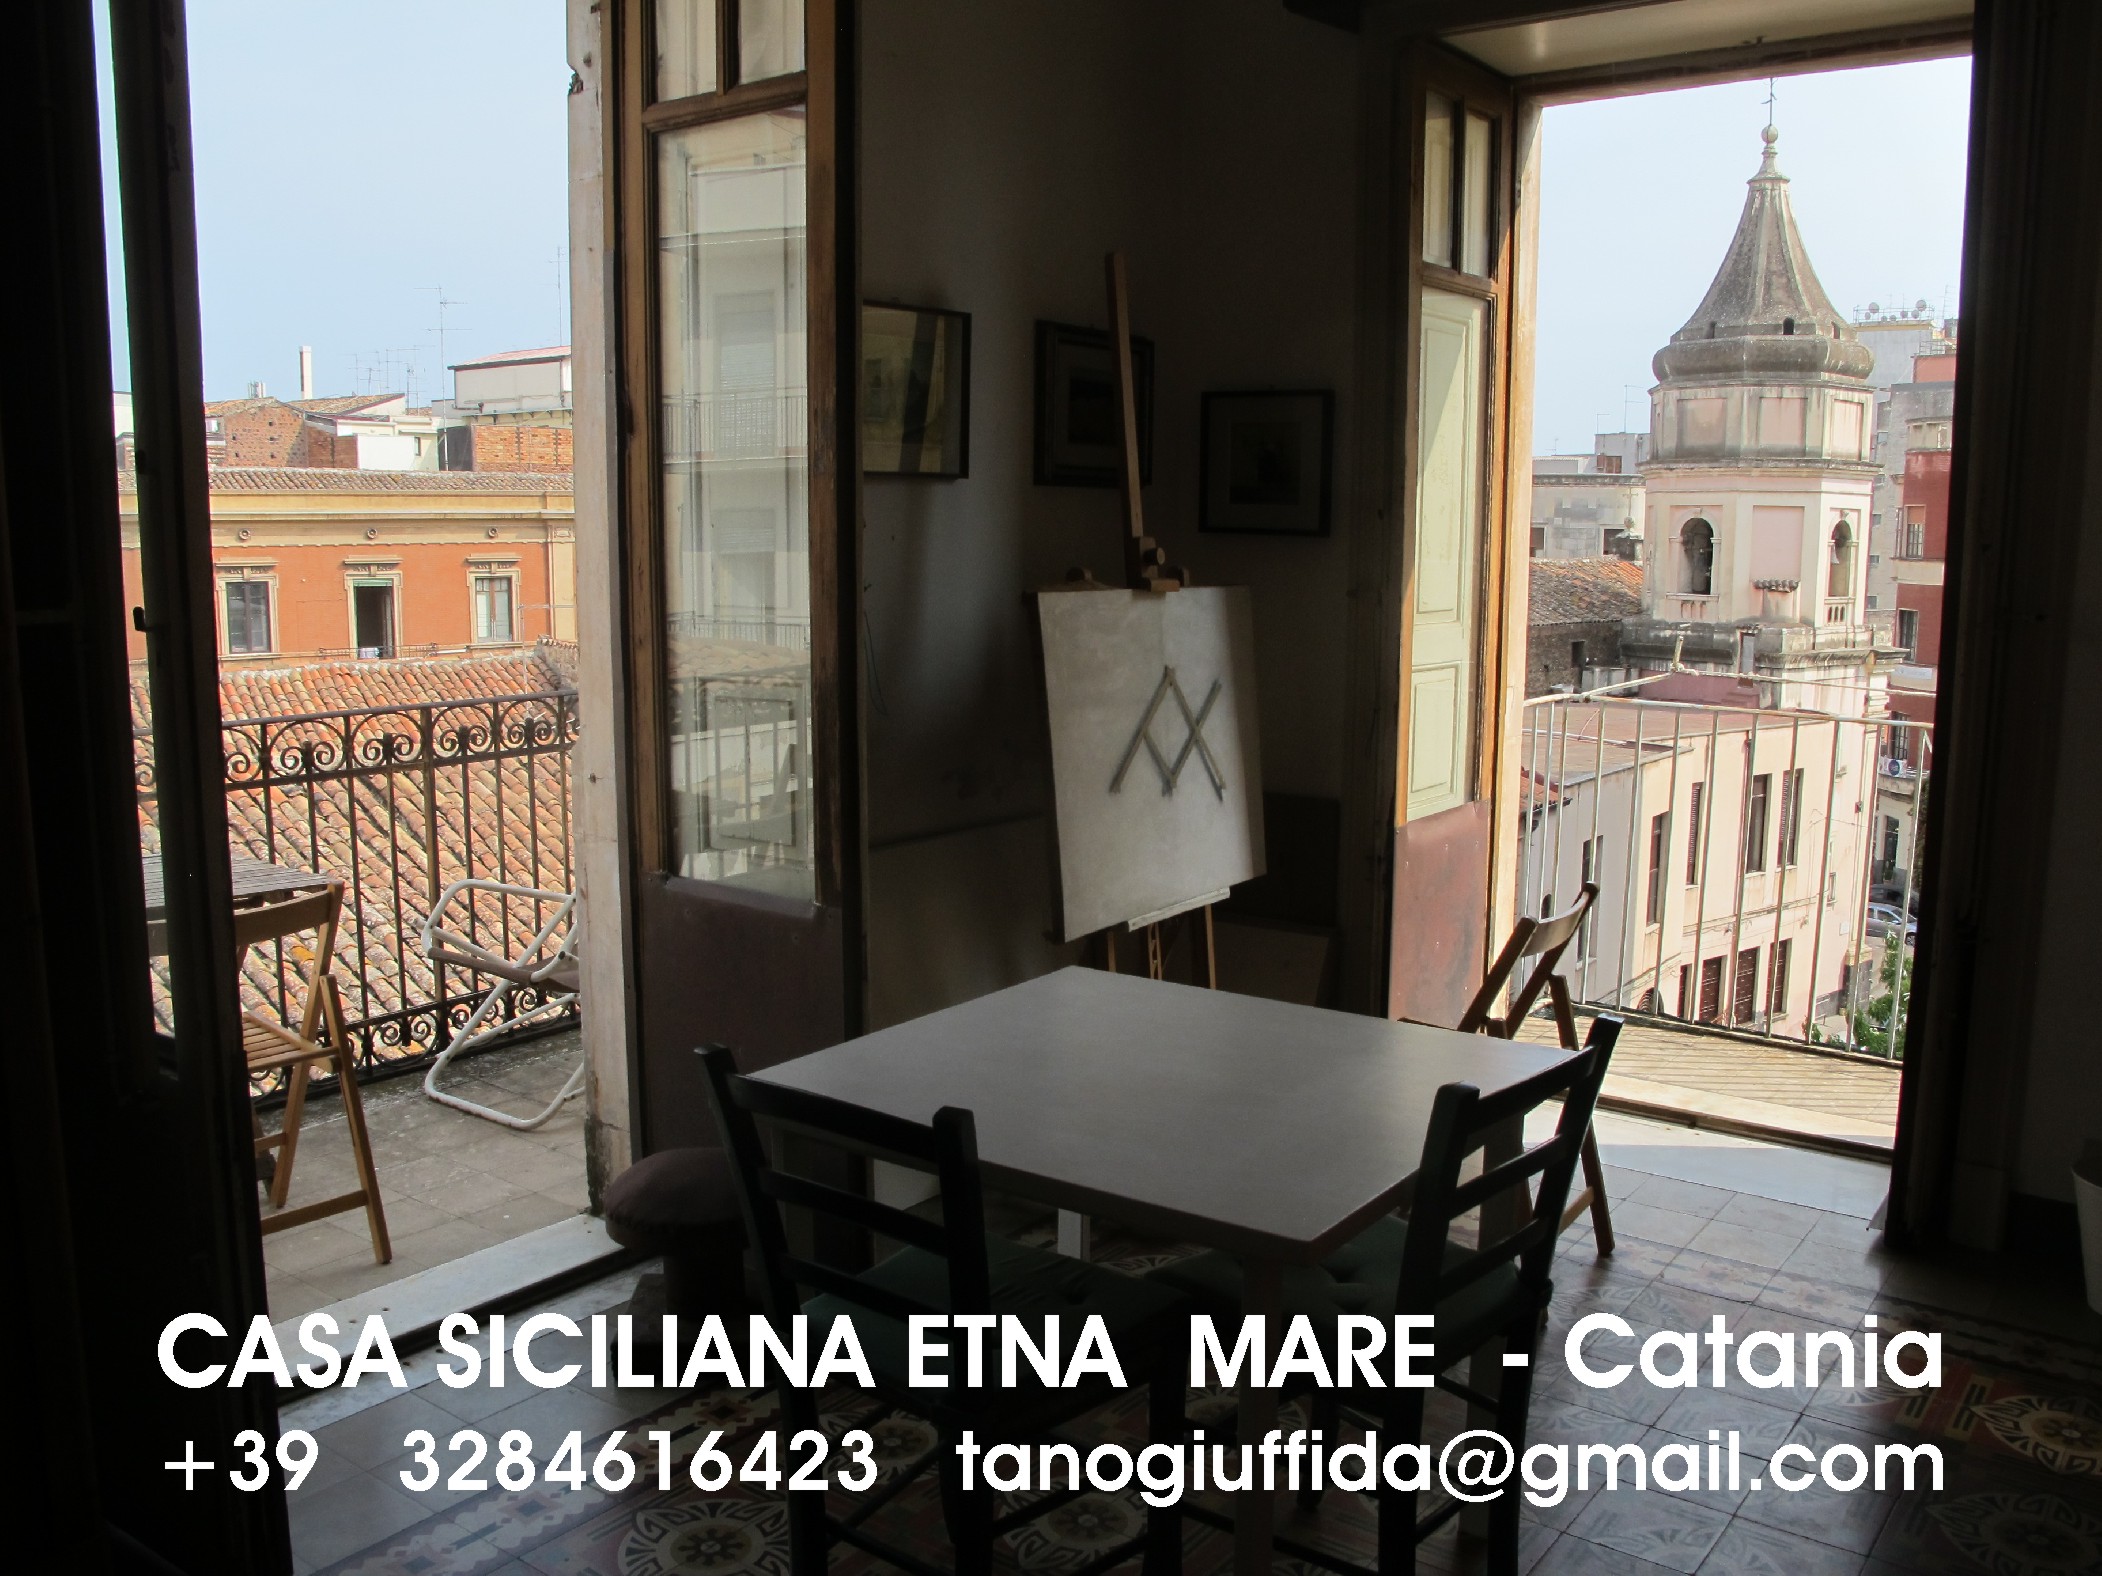 CASA_SICILIANA_ETNA__MARE_-_Catania